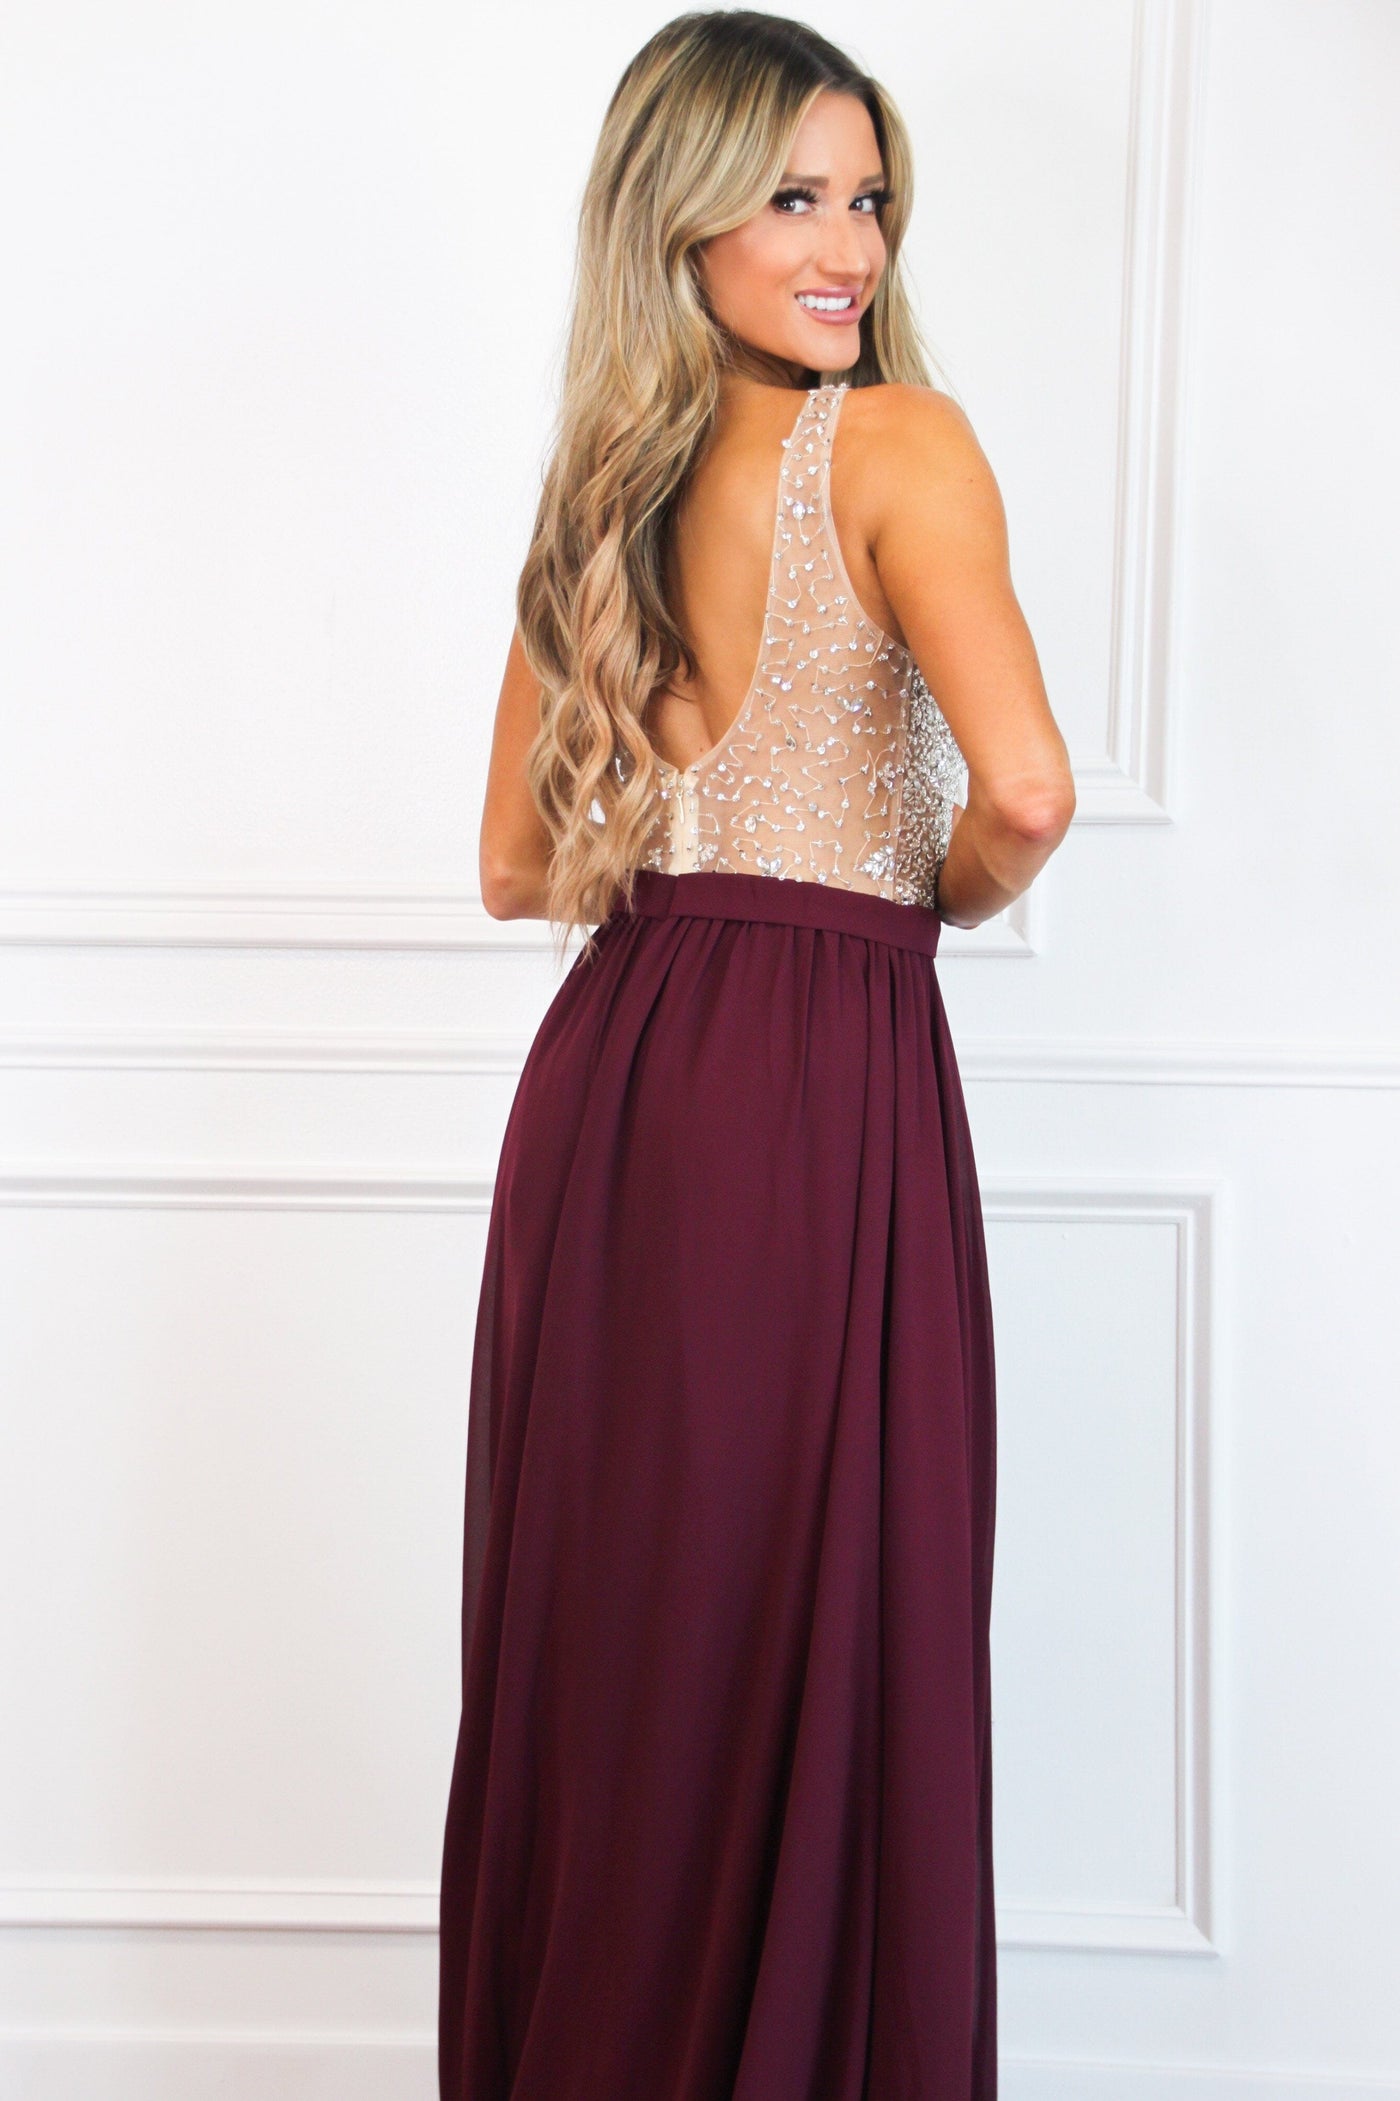 Elegant Affair Beaded Maxi Dress: Wine - Bella and Bloom Boutique